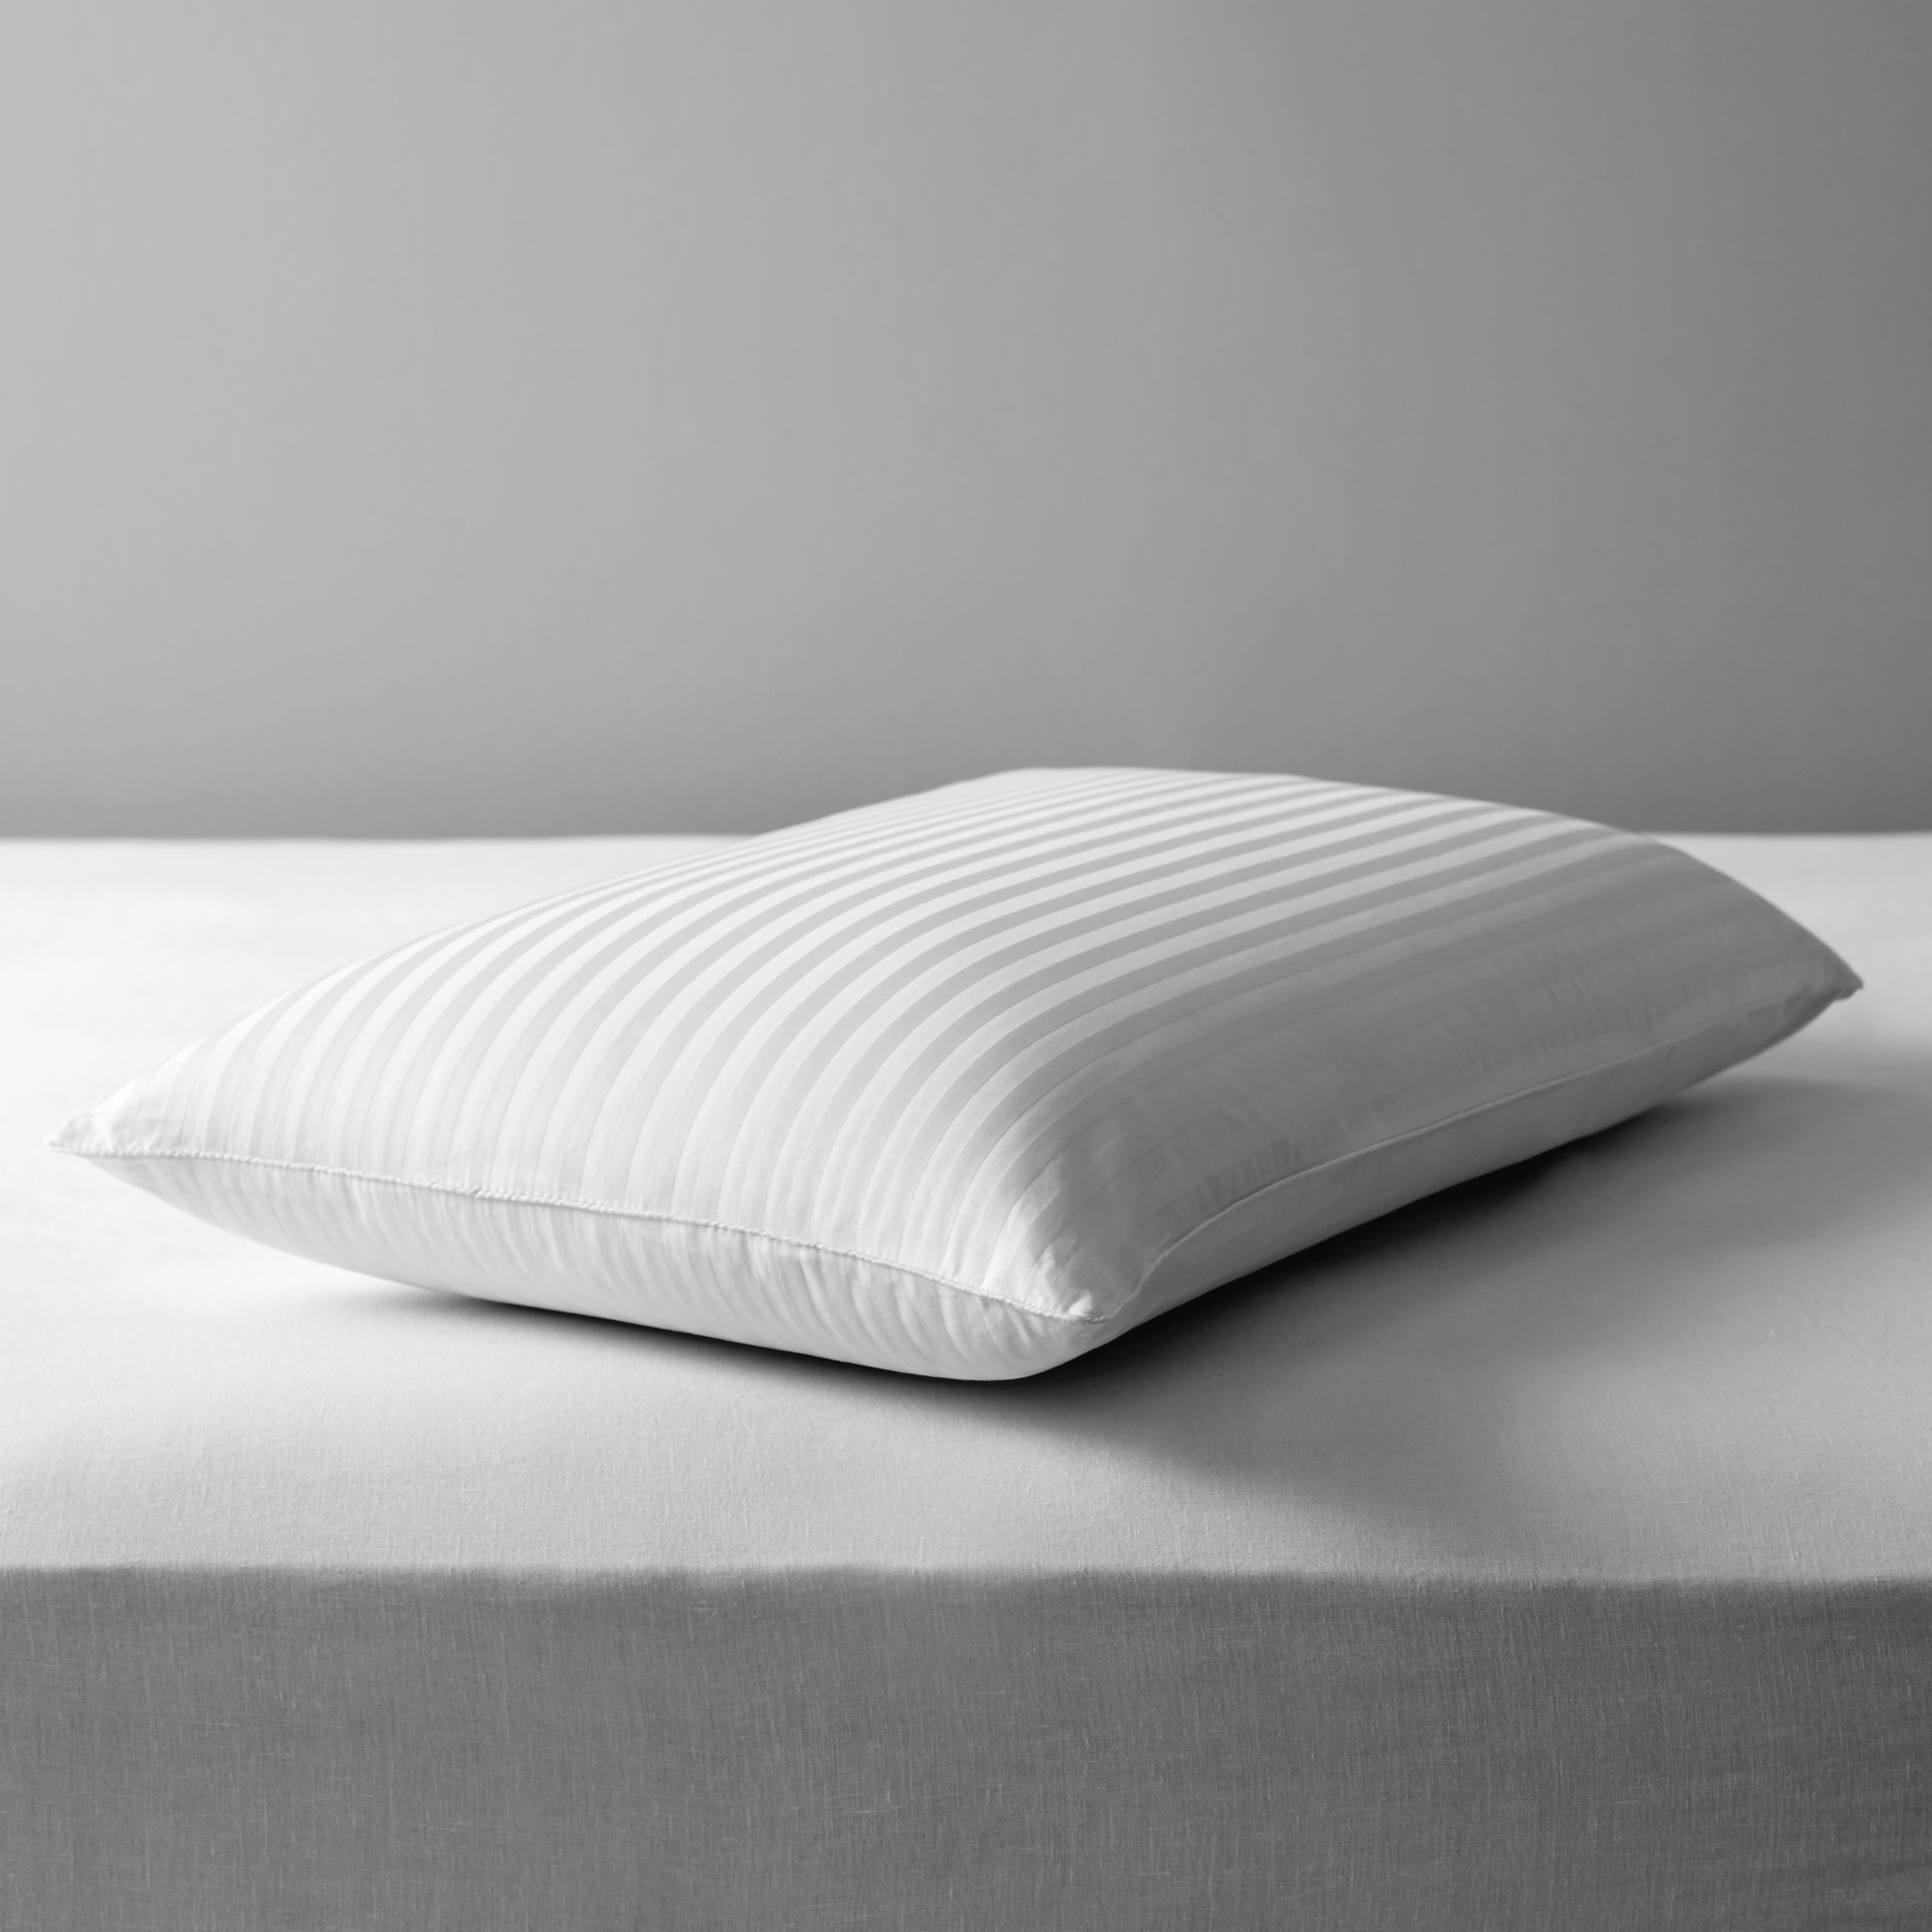 dunlopillo latex foam pillow uk